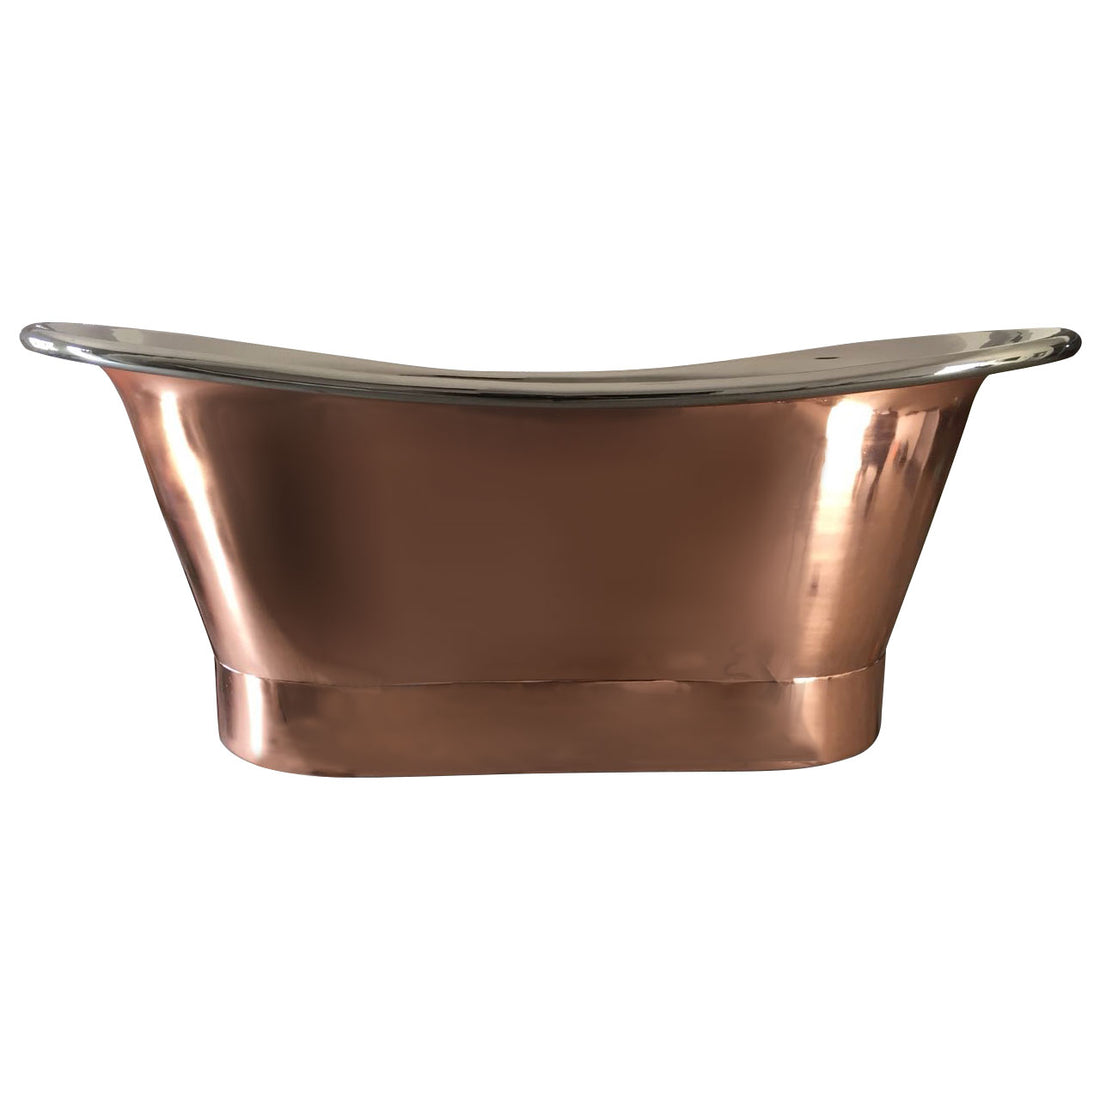 Copper Bathtub Nickle Inside Shiny Copper Outside